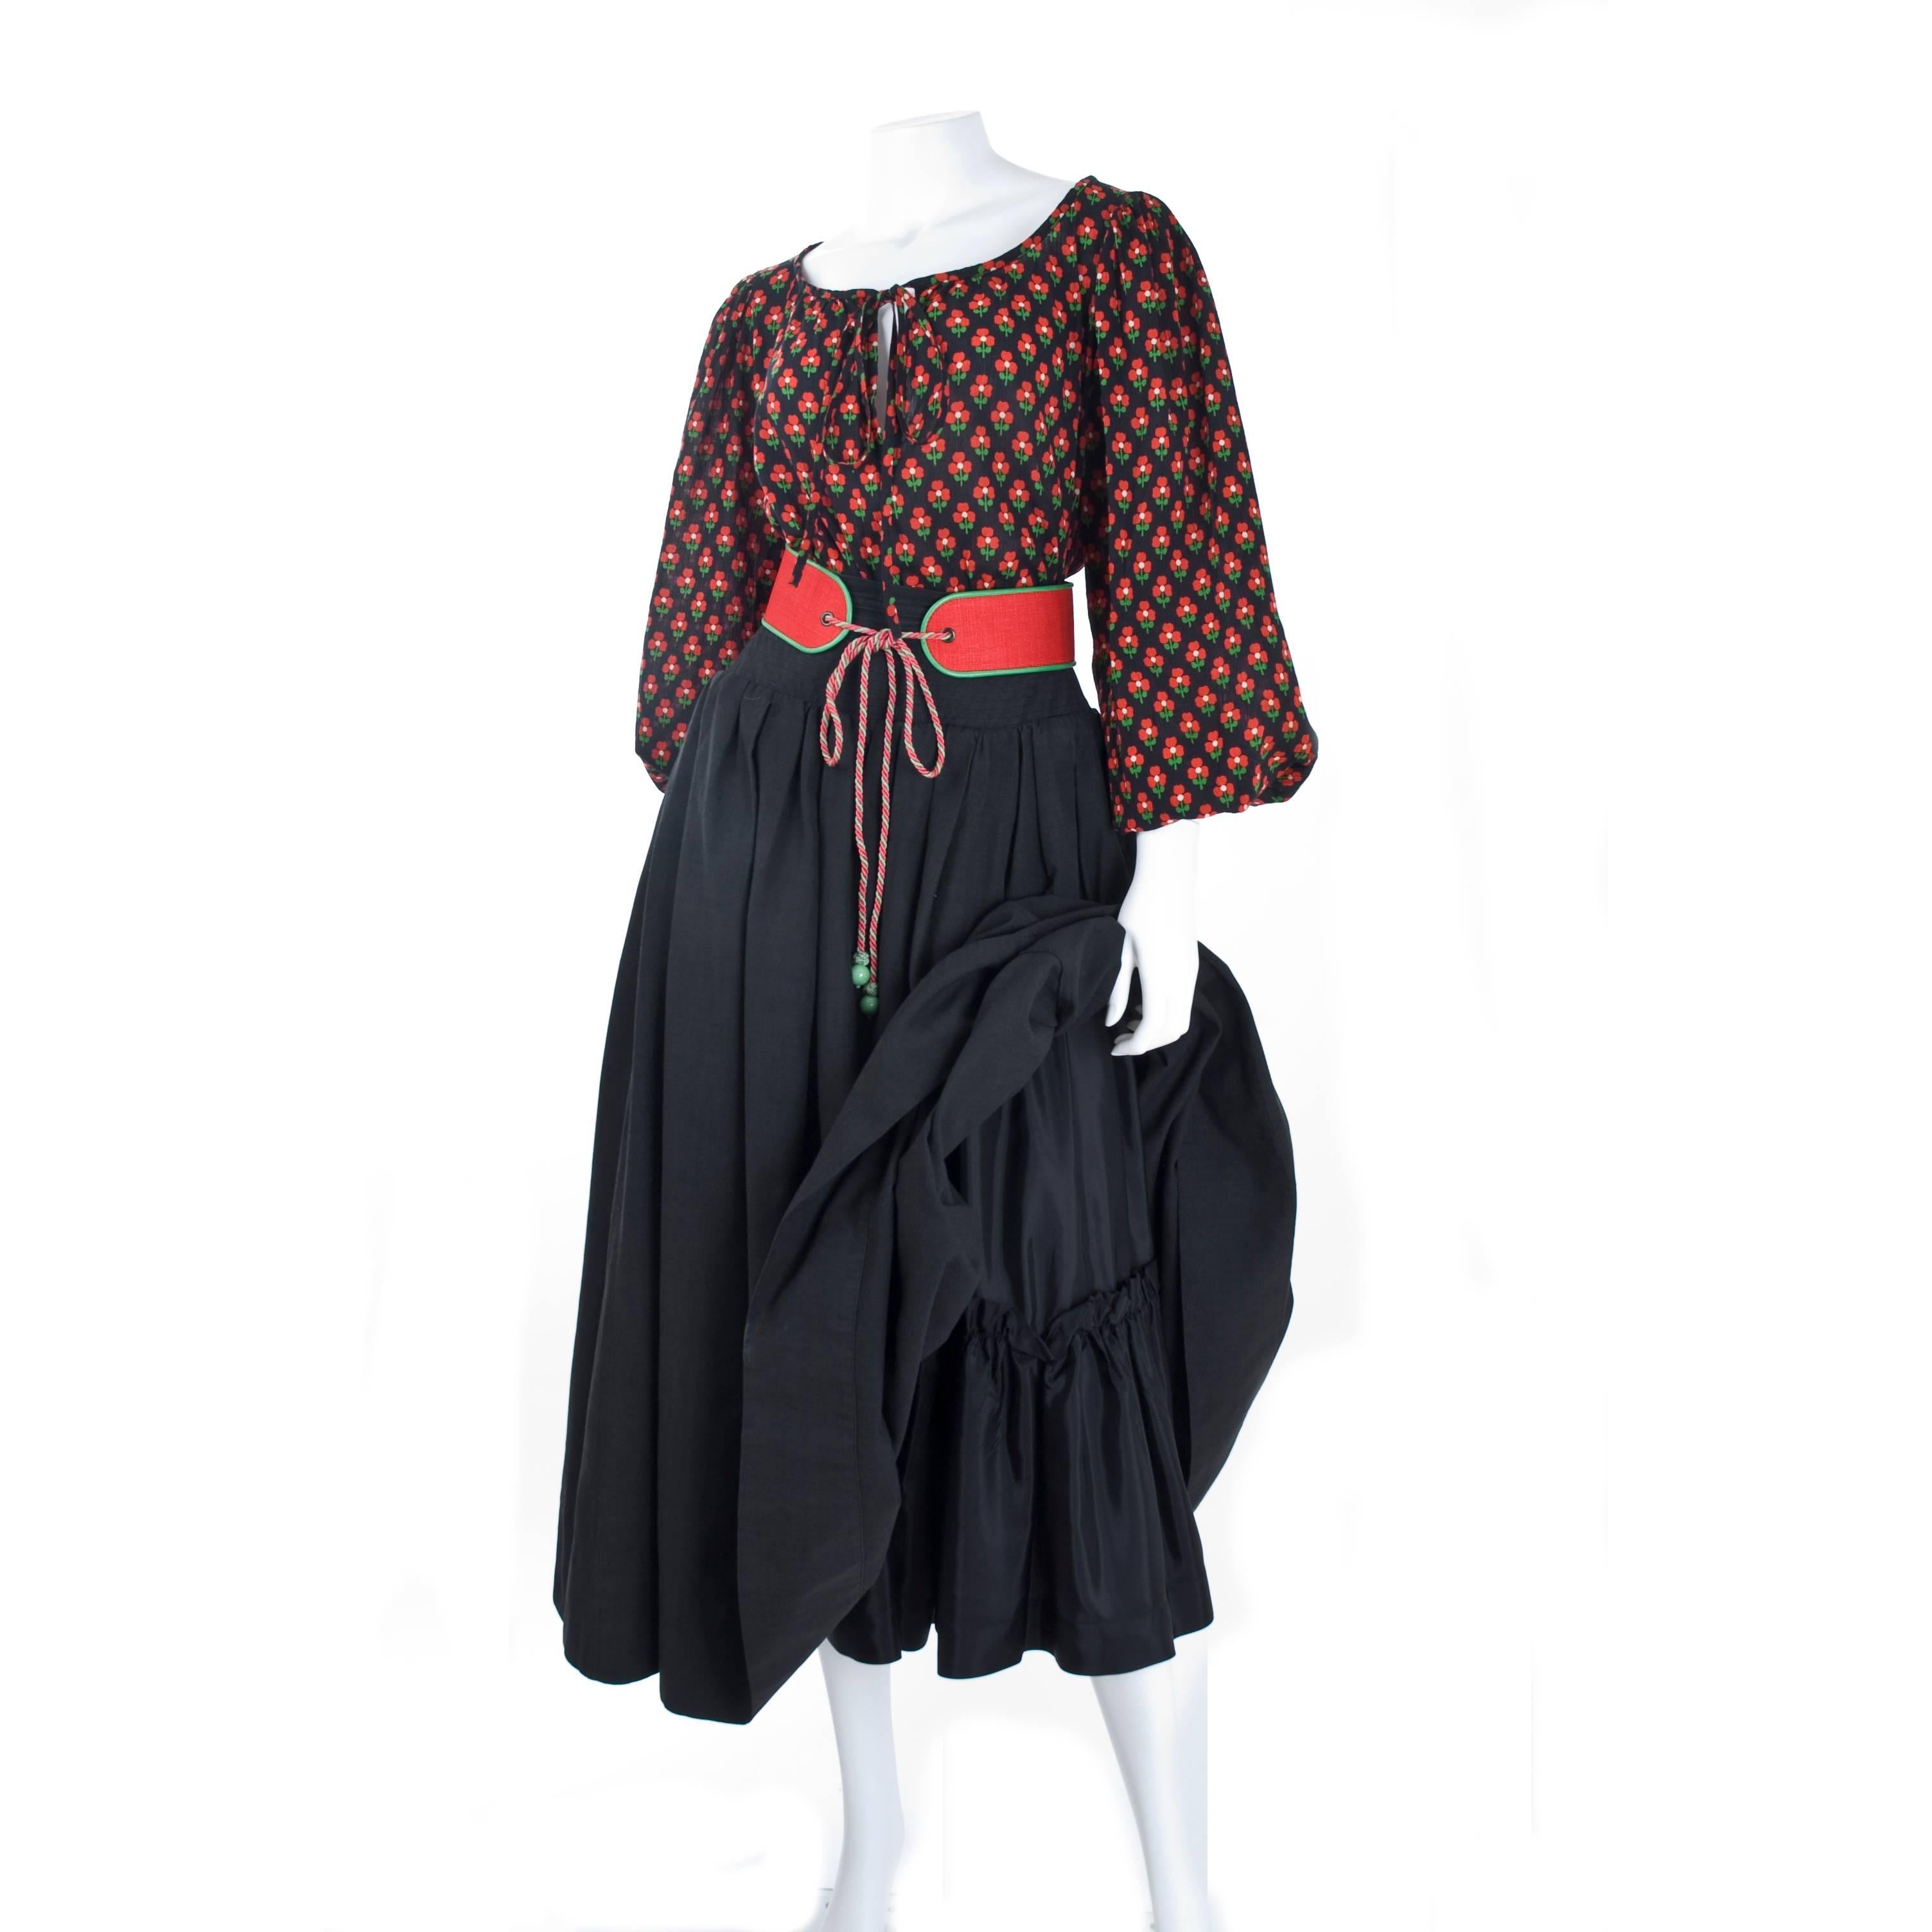  Yves Saint Laurent Vintage Gypsy Skirt Blouse and Belt, 1970s 1